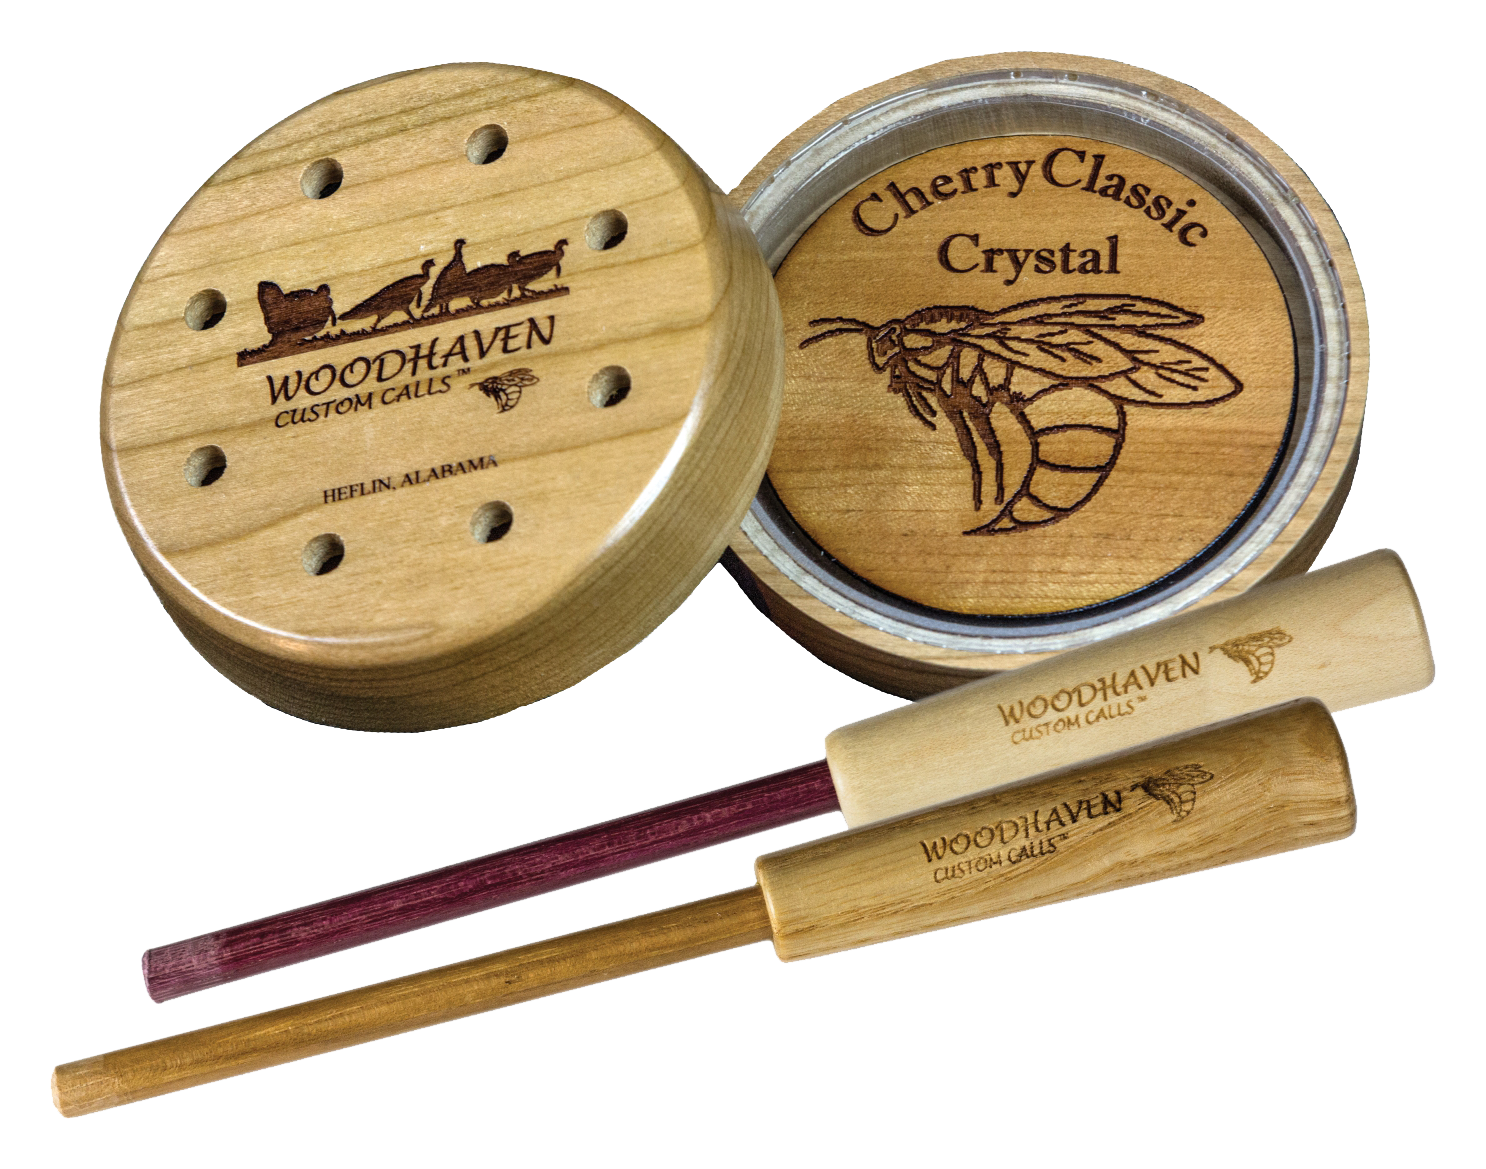 WoodHaven Custom Calls Cherry Classic Crystal Friction Turkey Call